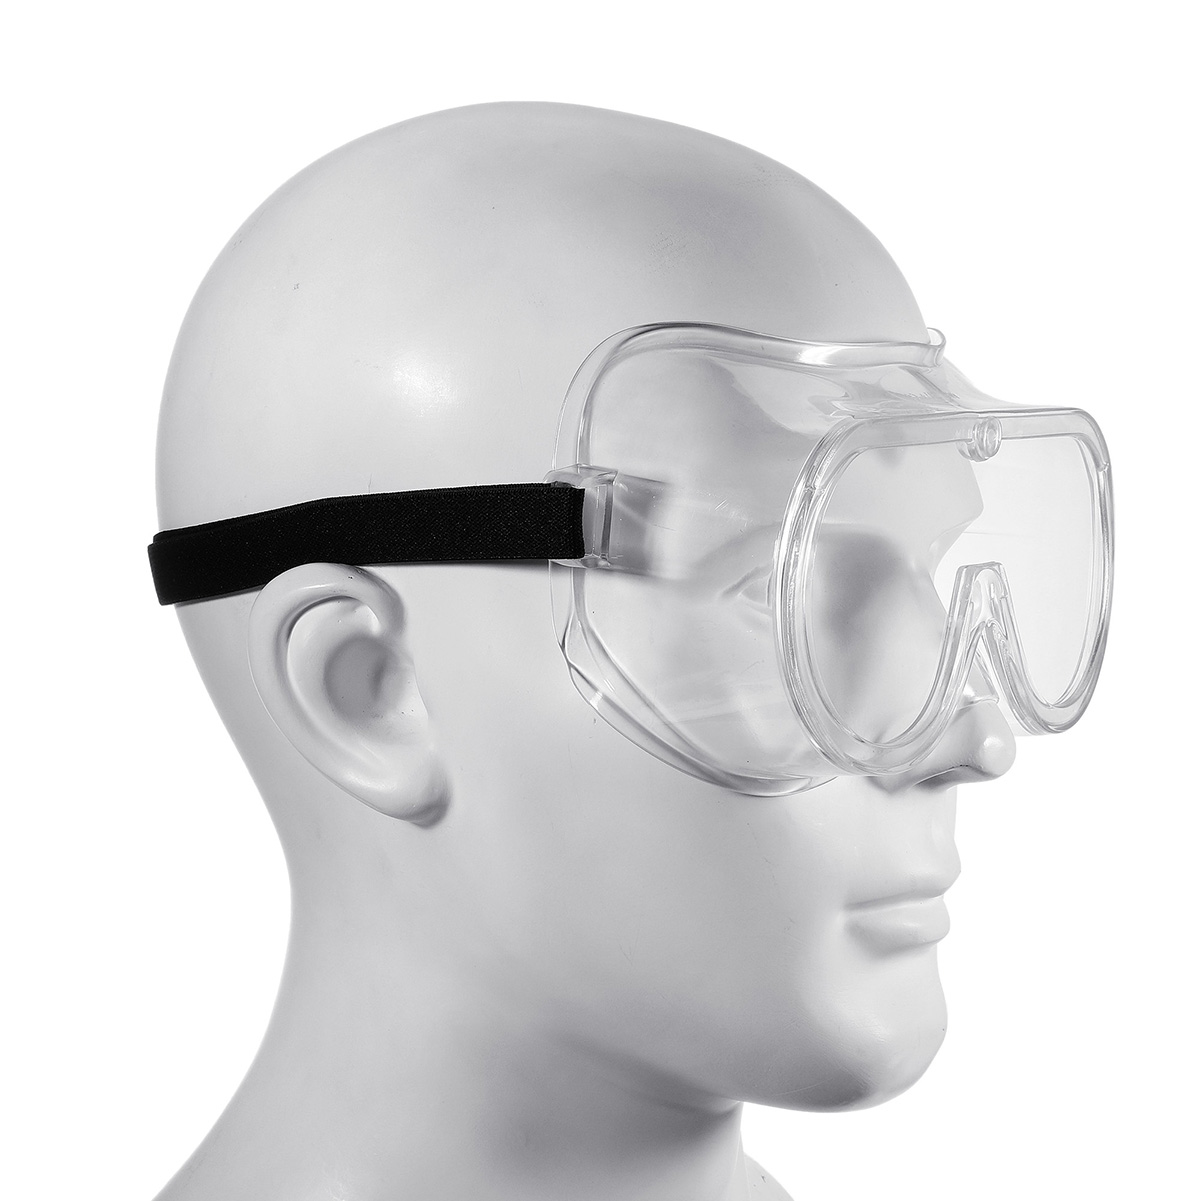 Safety-Goggles-Splash-Resistant-Lens-Breathable-Valves-Anti-Fog-Protative-Tools-1660391-8